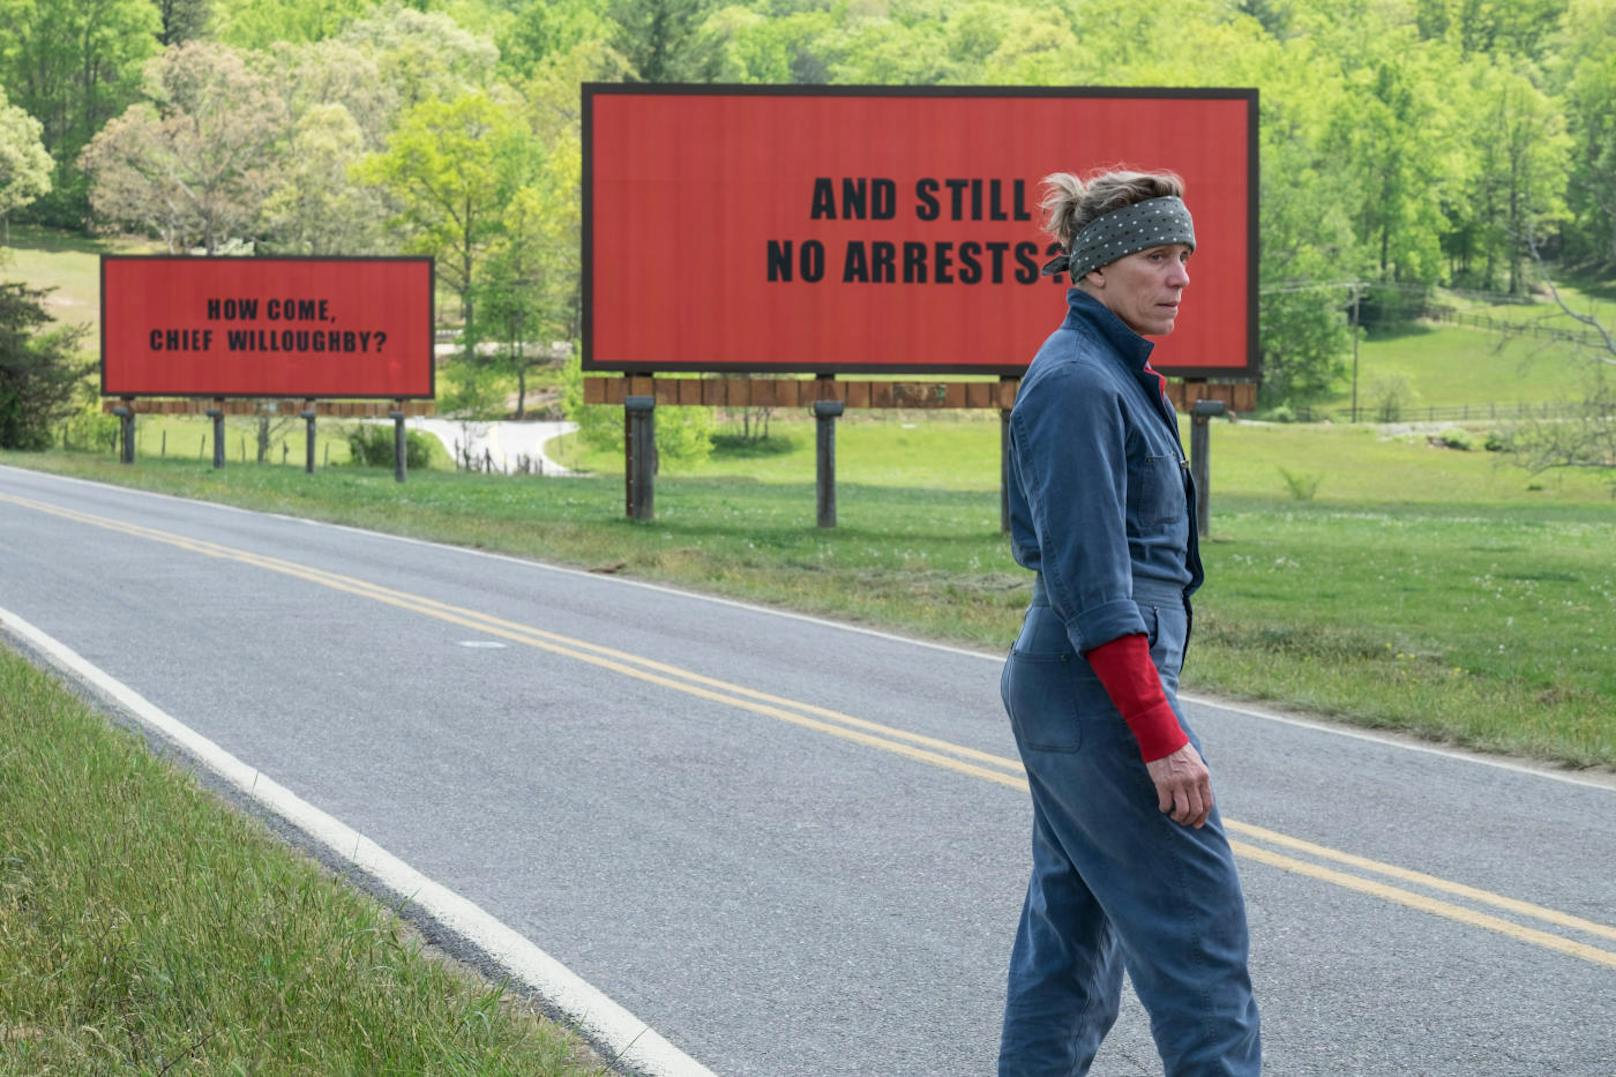 Frances McDormand in "Three Billboards Outside Ebbing, Missouri". 